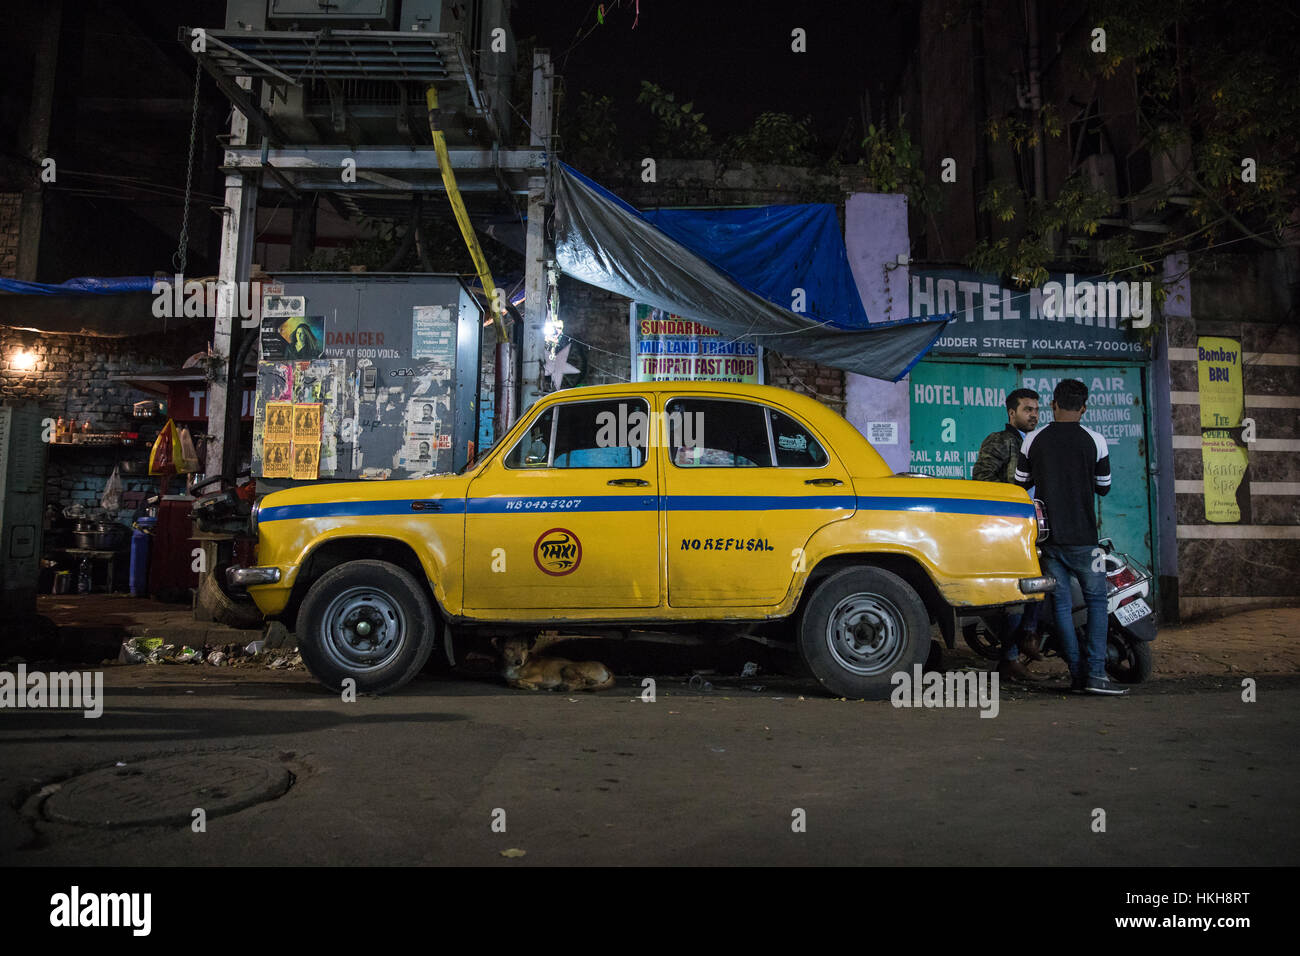 An iconic yellow Hindustan Ambassador taxi on Sudder Street in Kolkata (Calcutta), West Bengal, India. Stock Photo